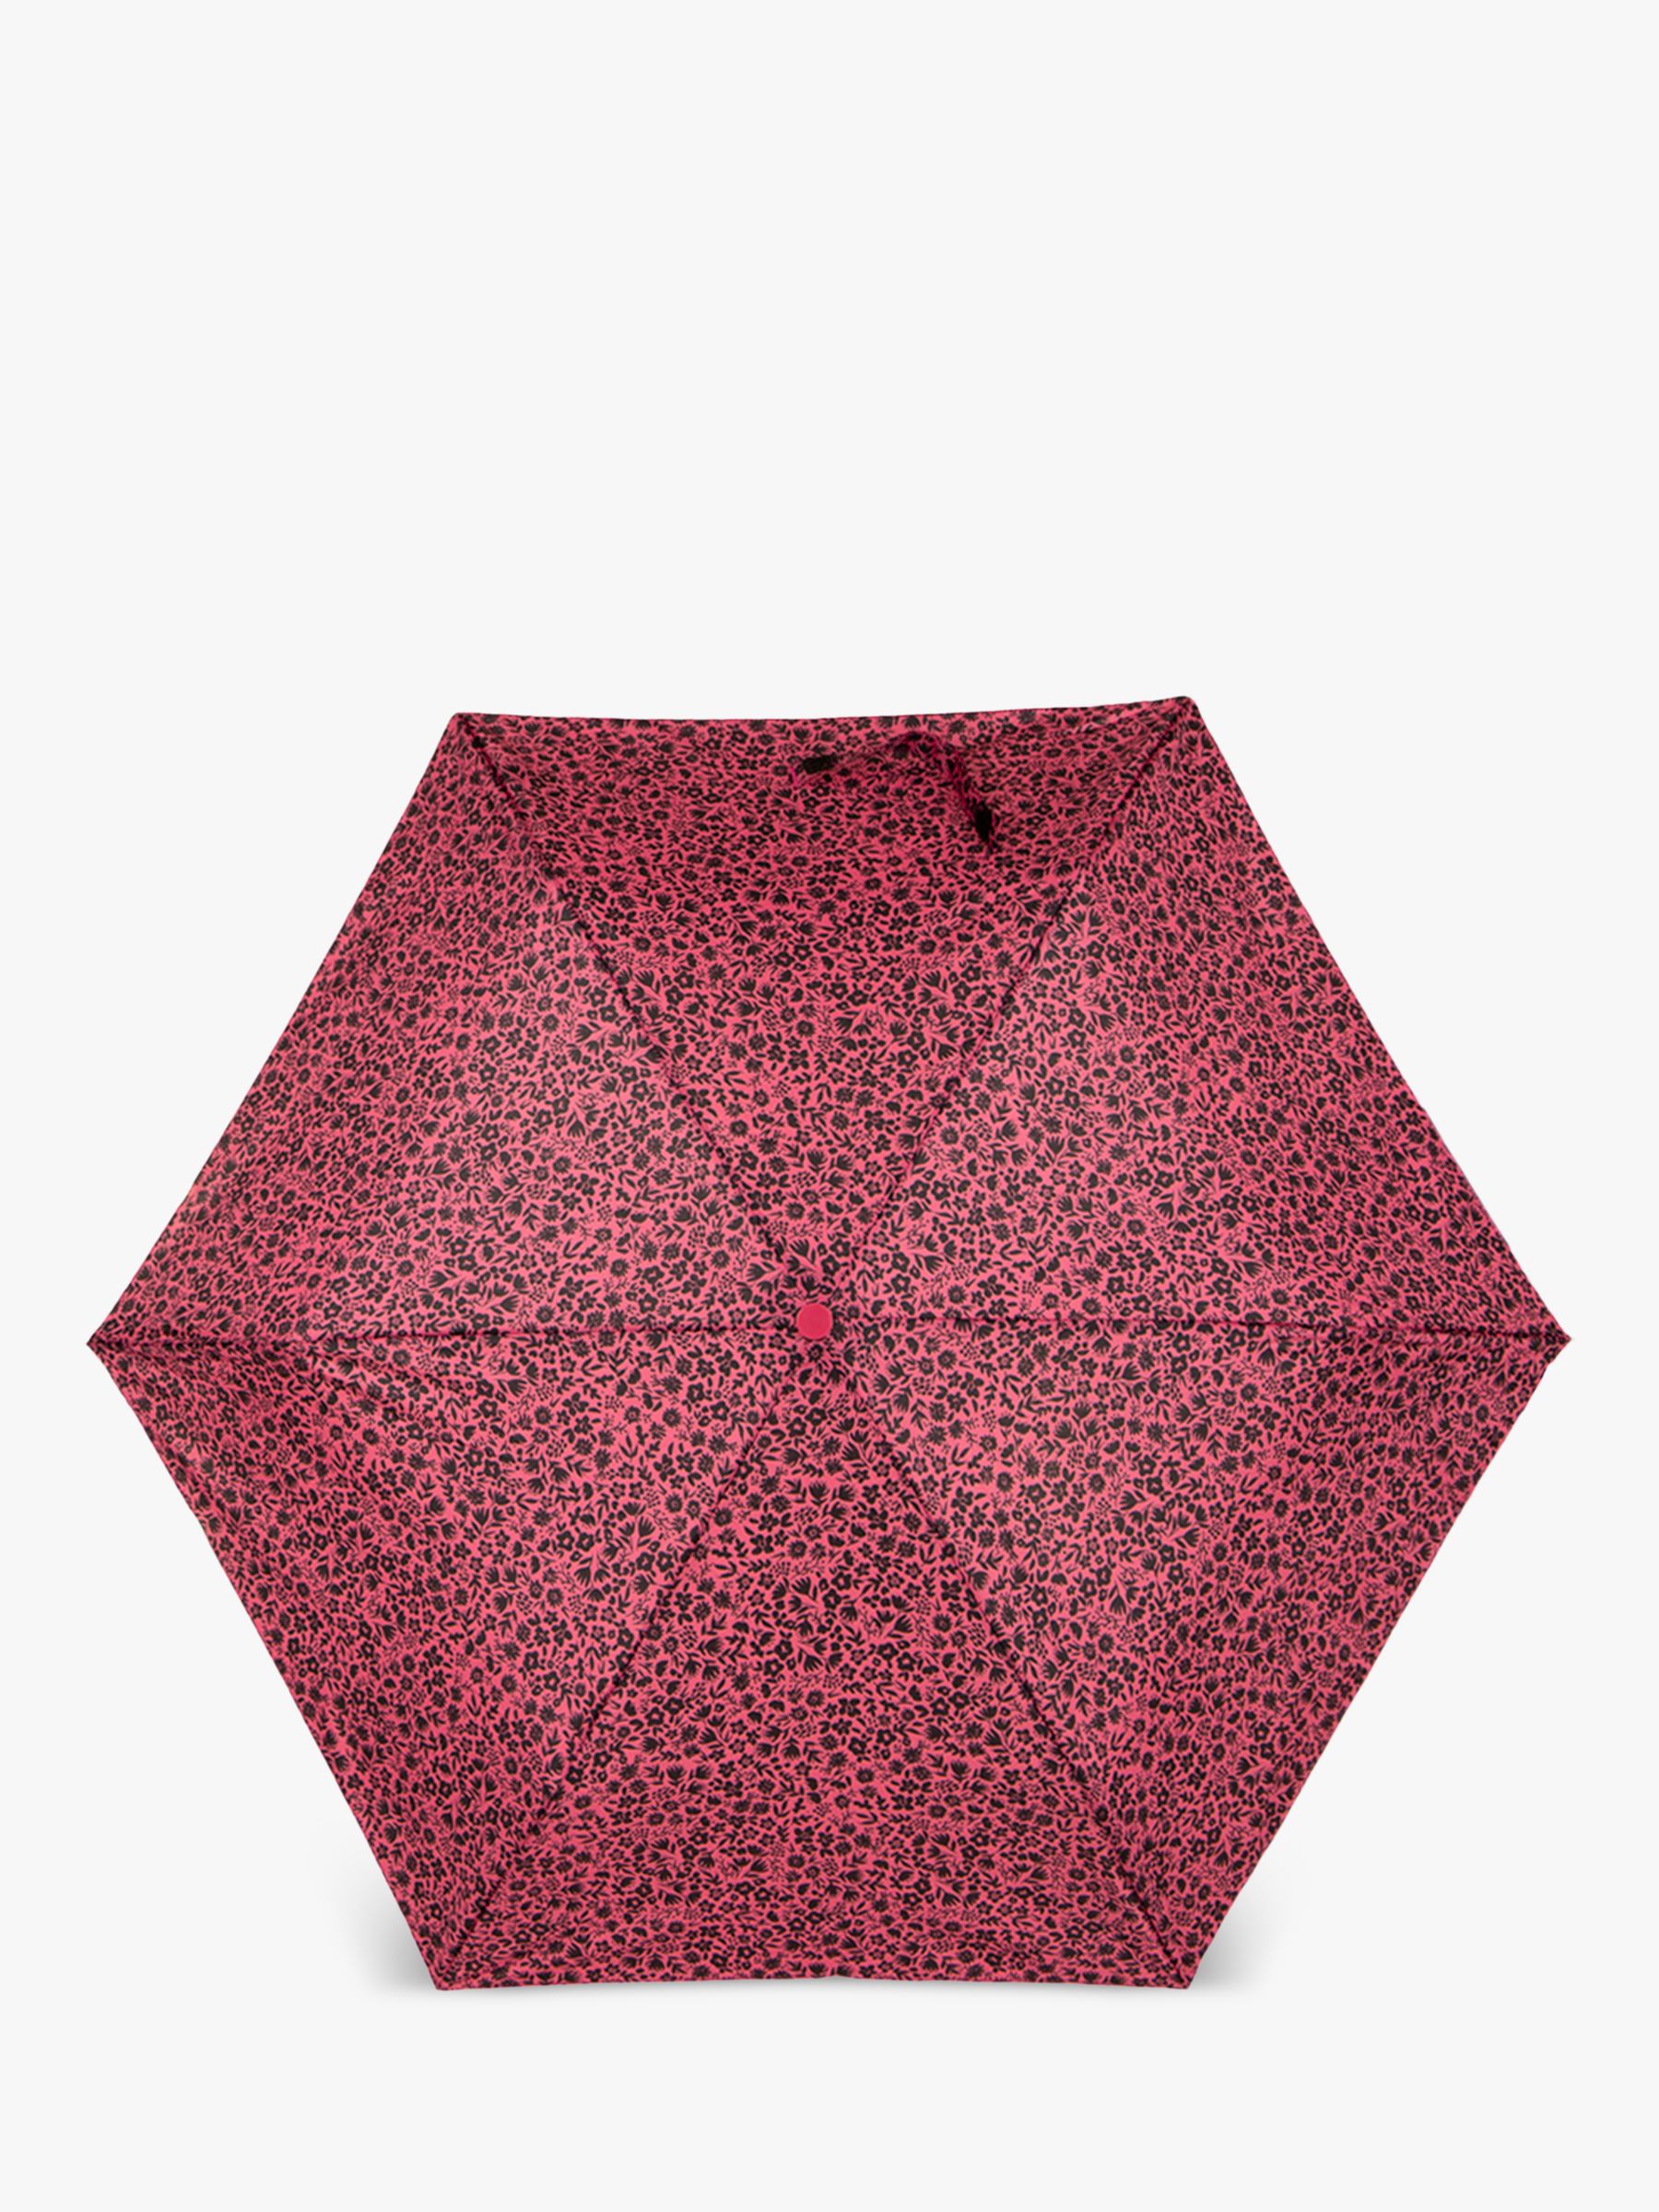 totes Supermini Umbrella and Foldaway Shopper Set, Pink/Black, One Size